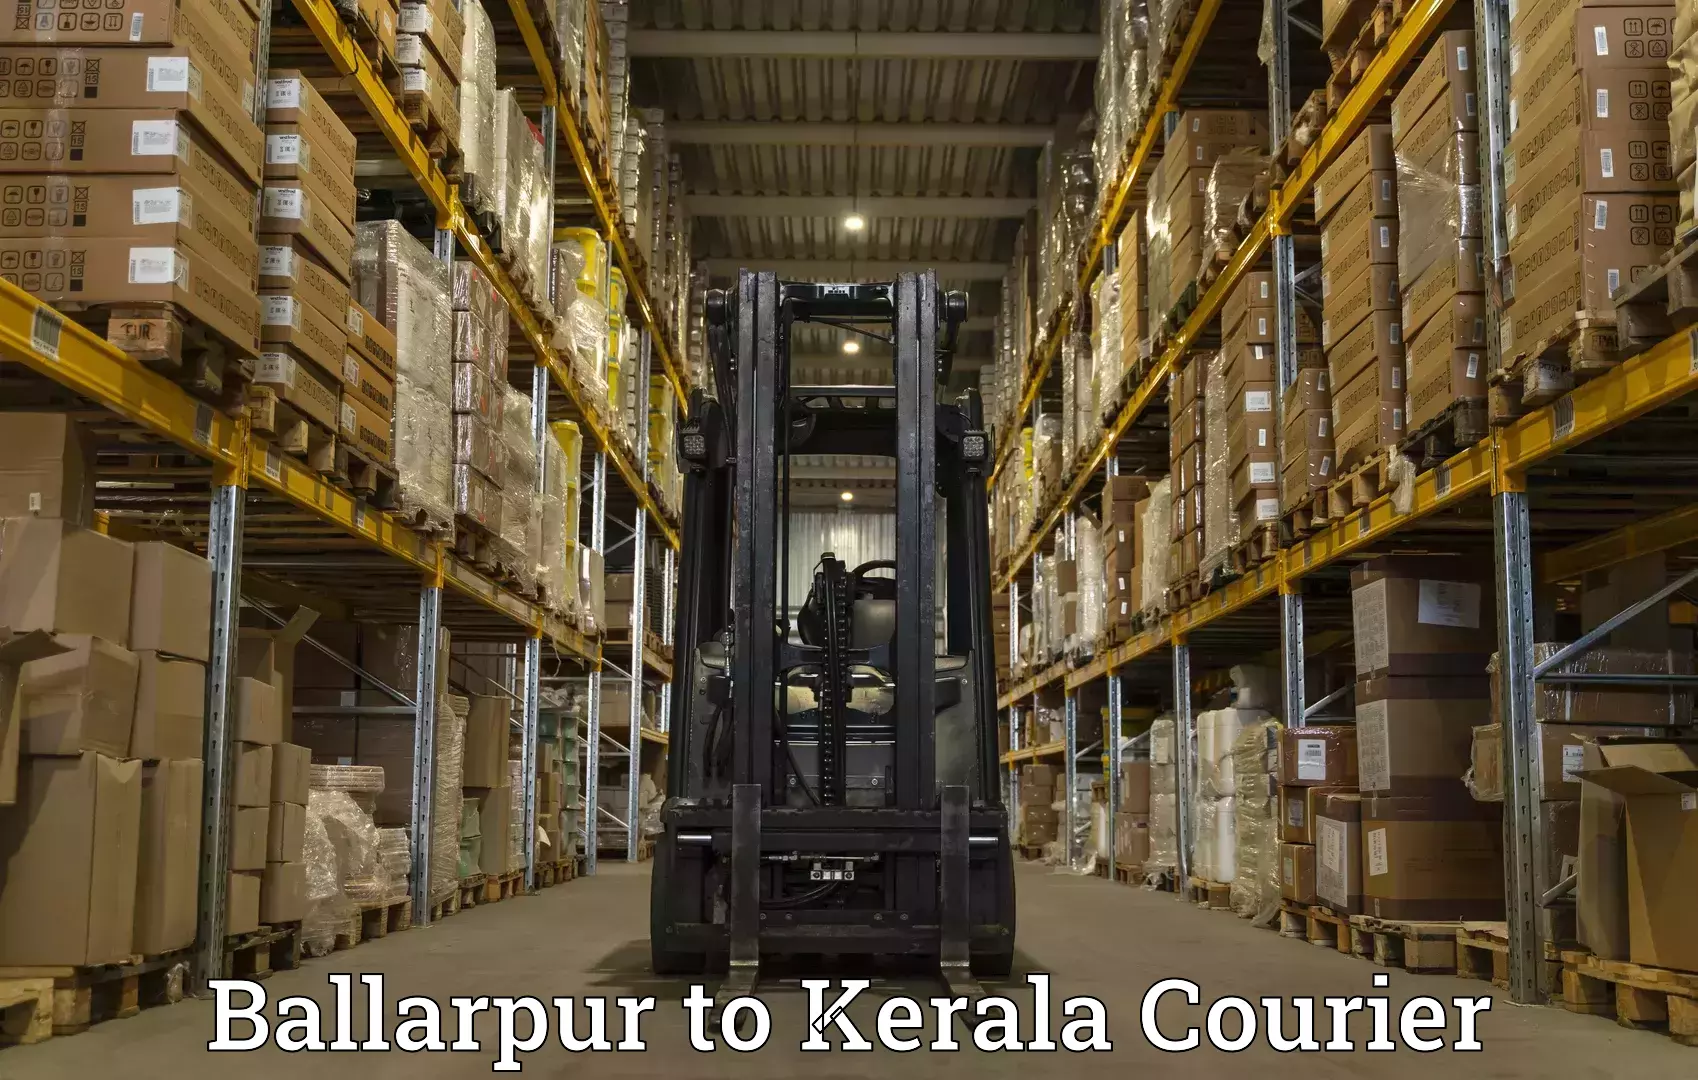 Courier service comparison Ballarpur to Kumily